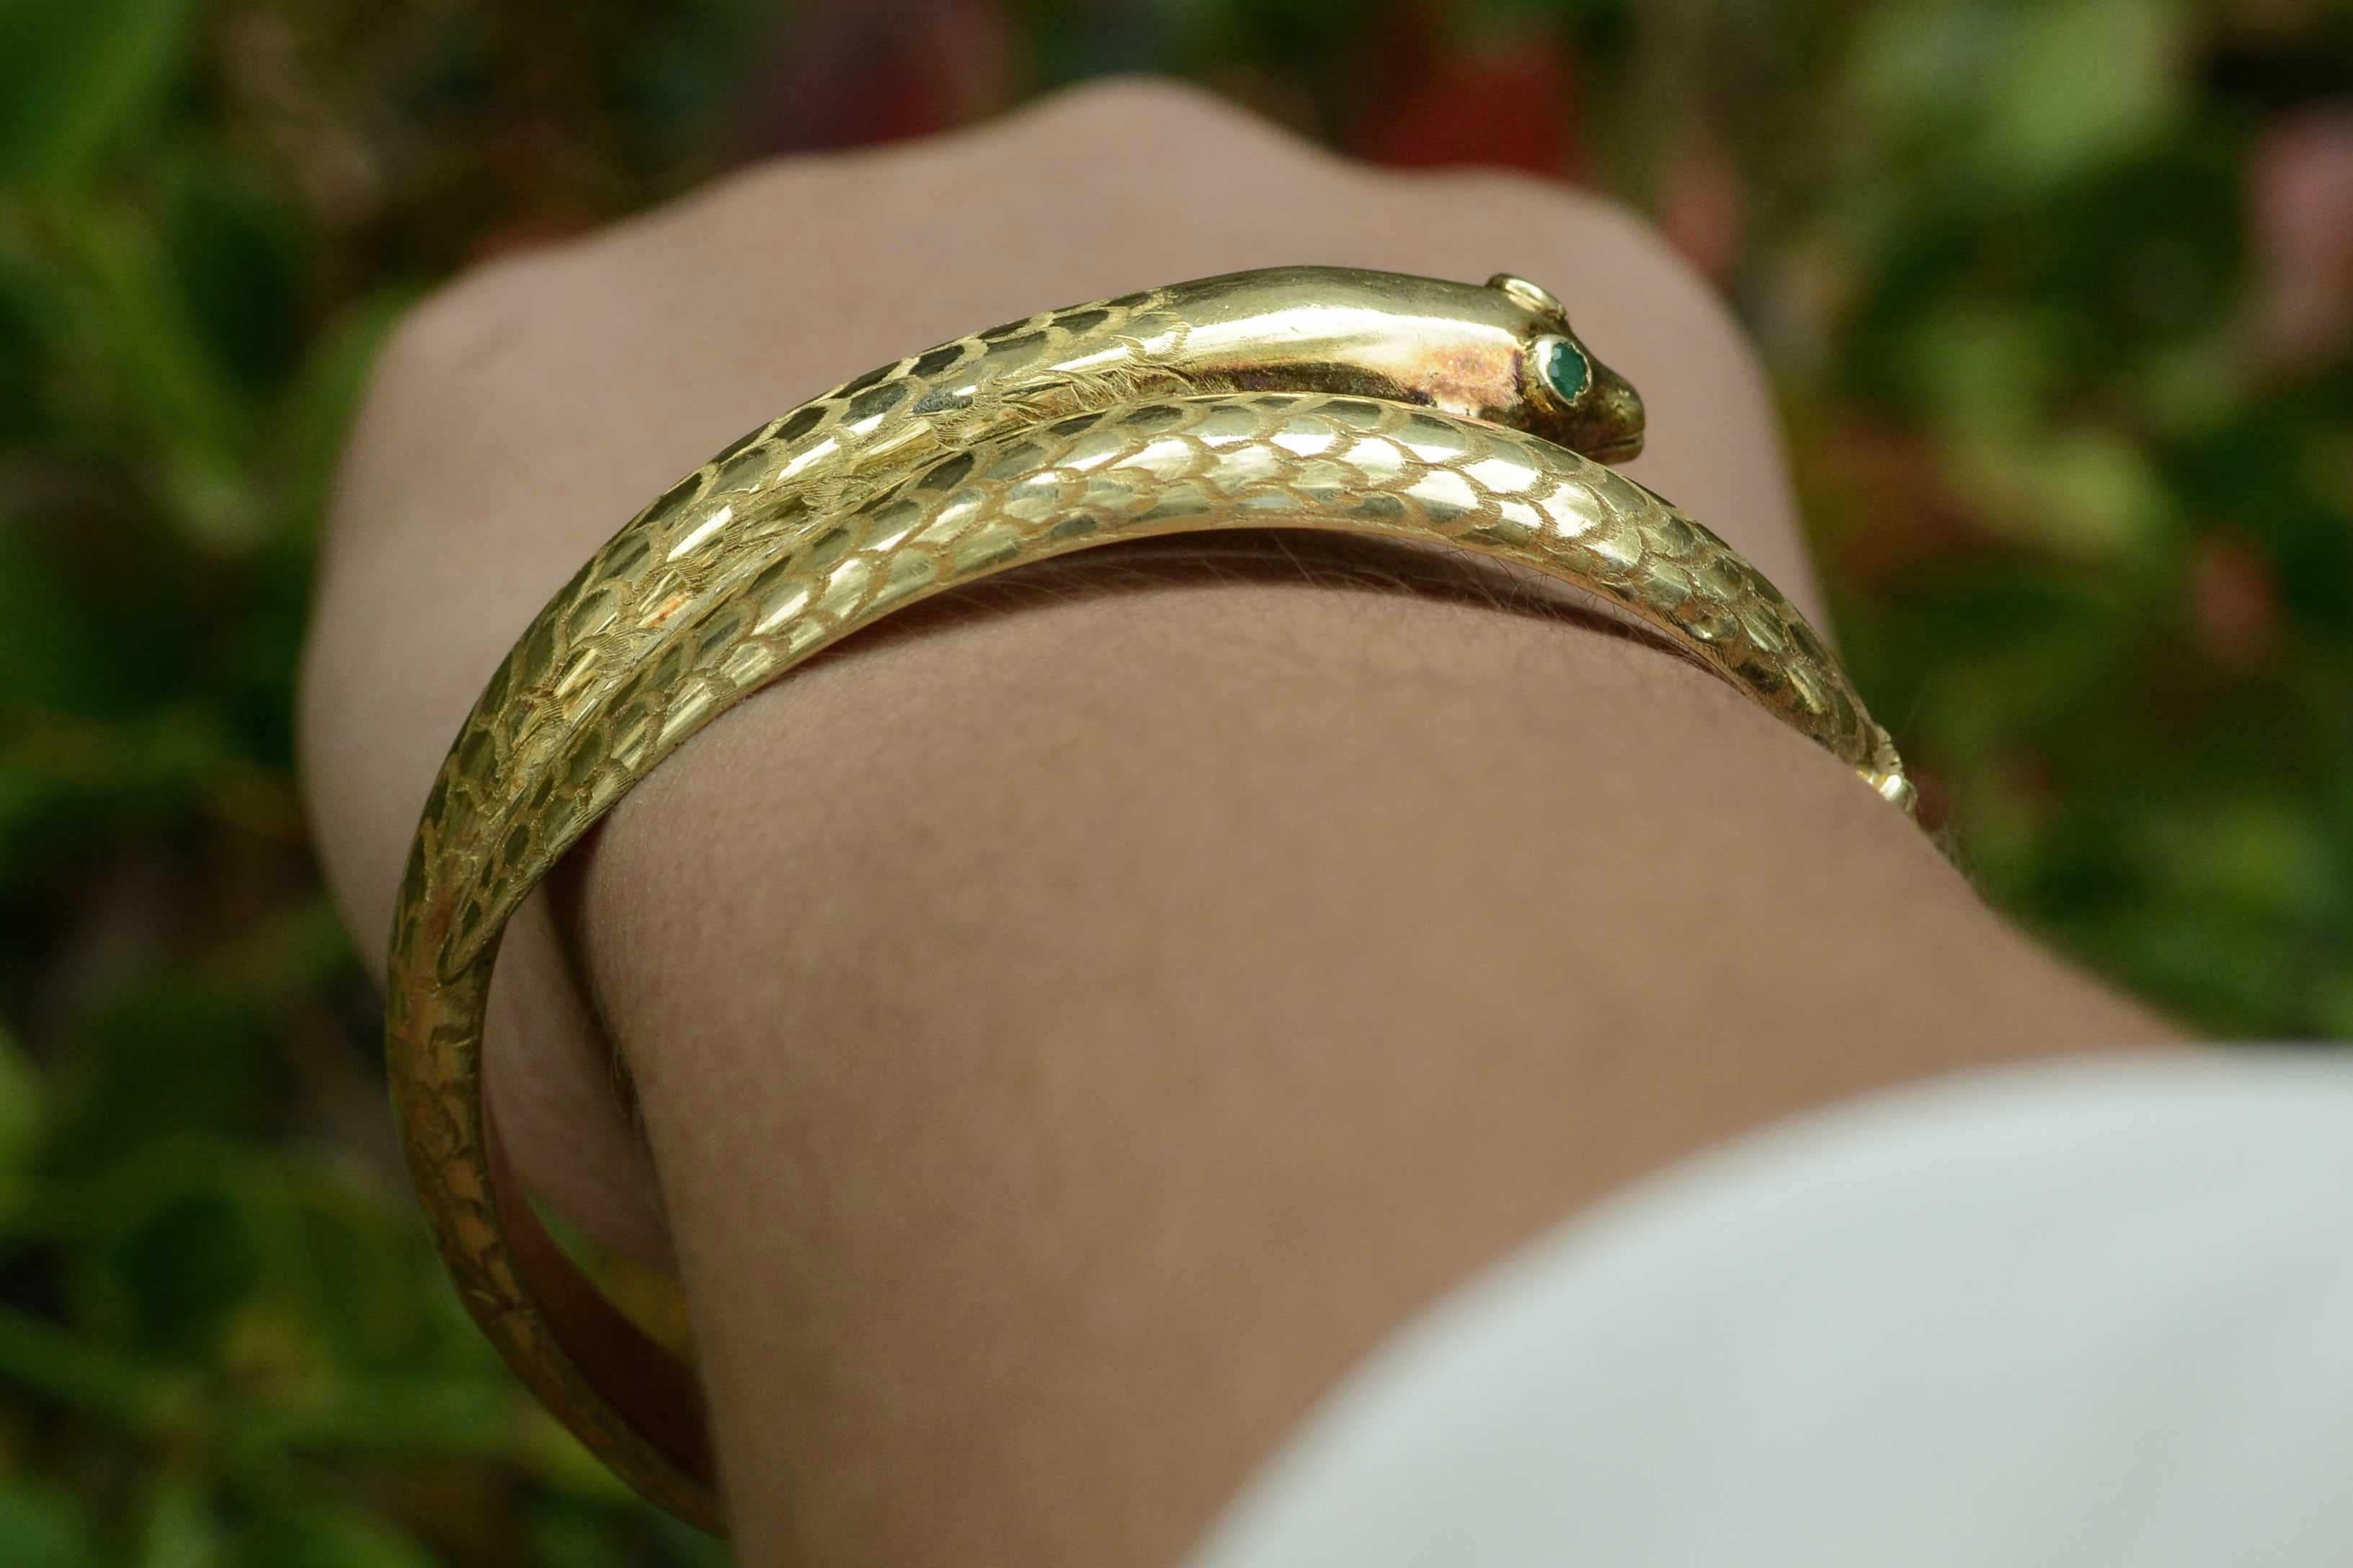 18k gold snake bracelet